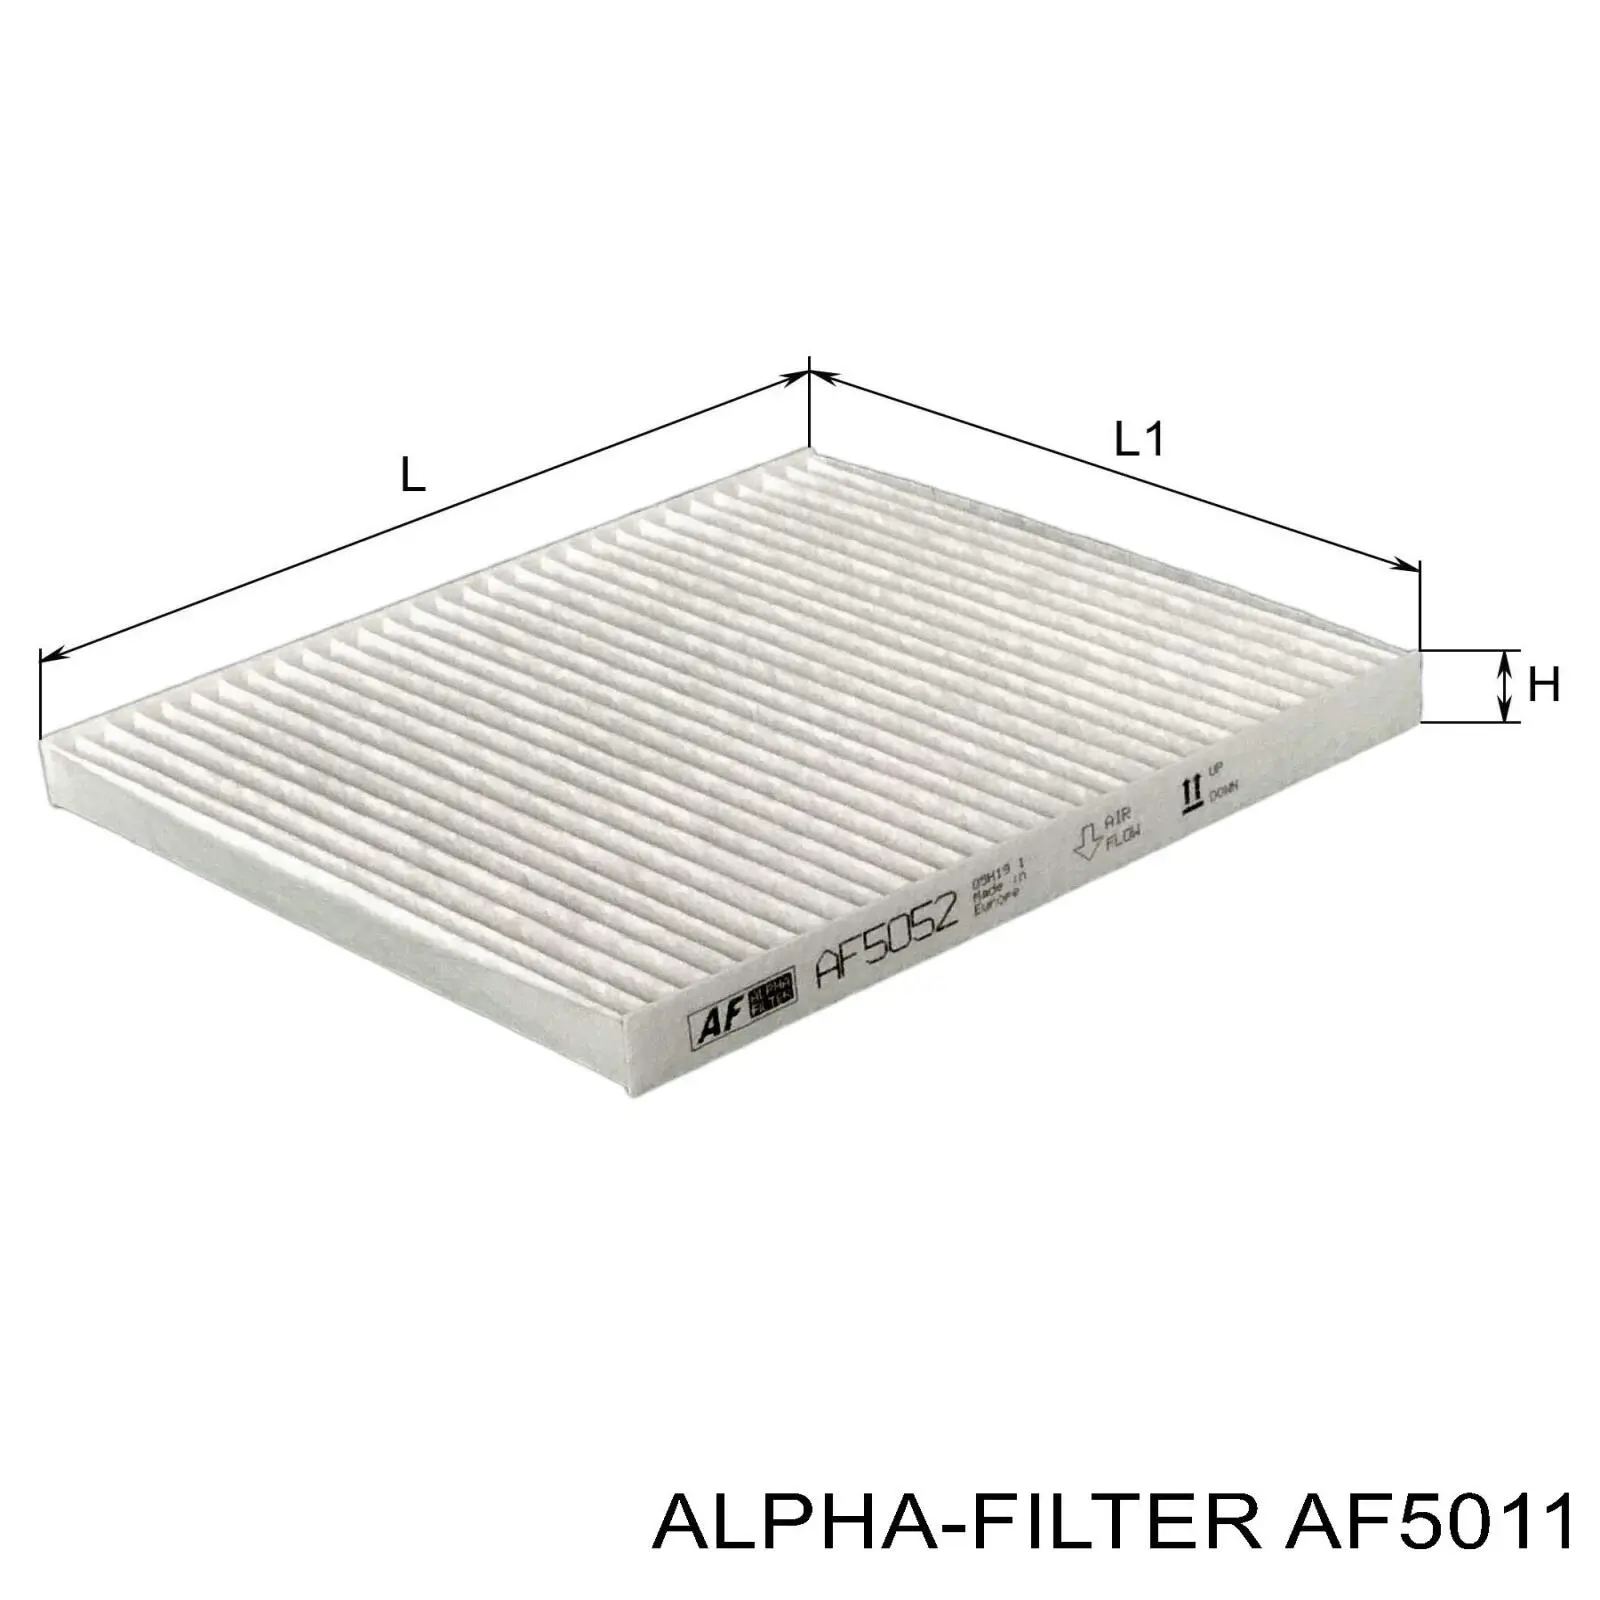 AF5011 Alpha-filter фильтр салона